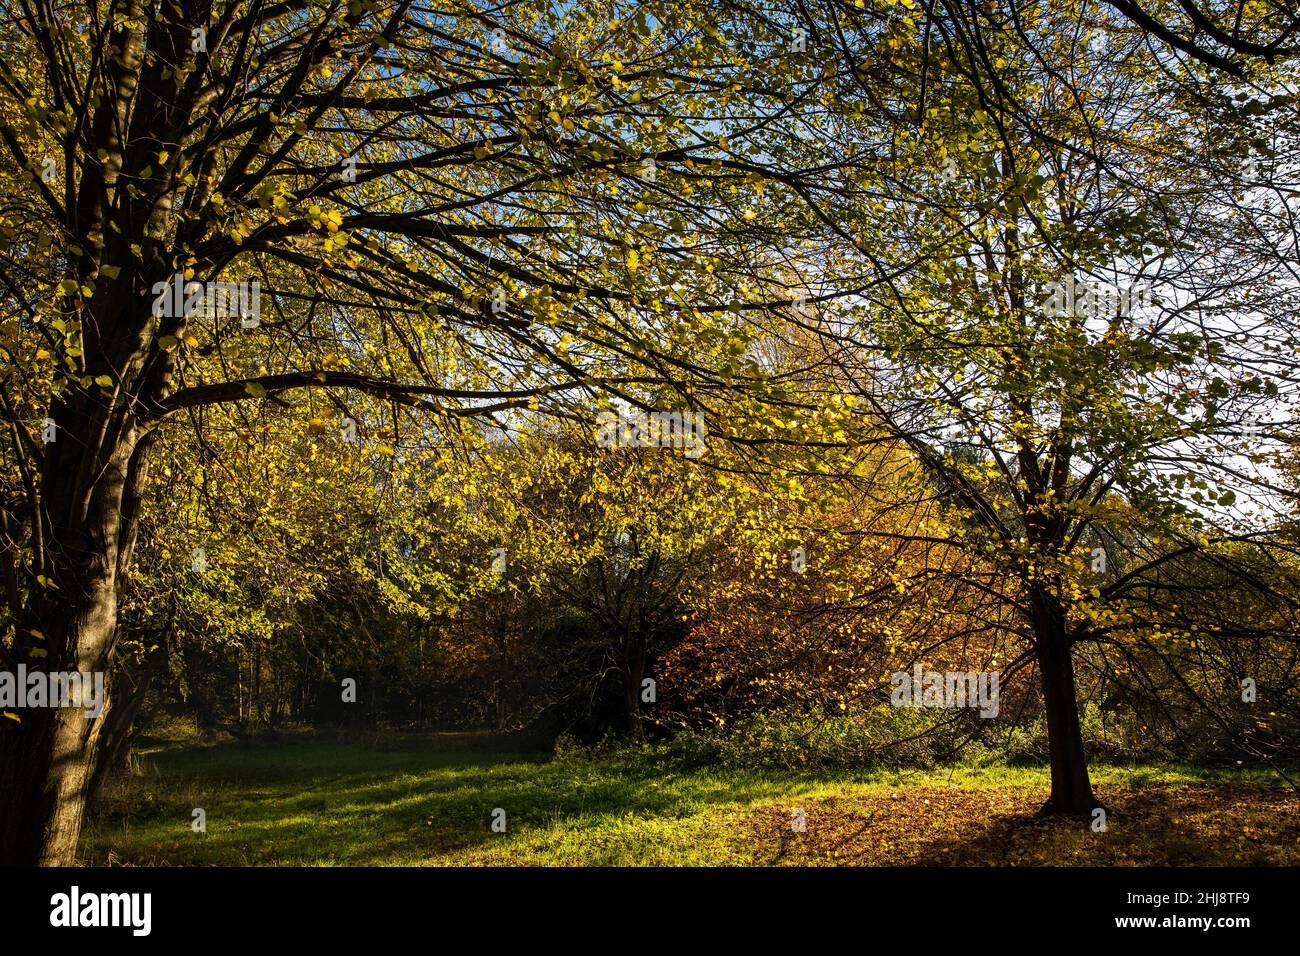 UK, England, Cheshire, Goostrey, University of Manchester, Jodrell Bank Arboretum trees in autumn Stock Photo